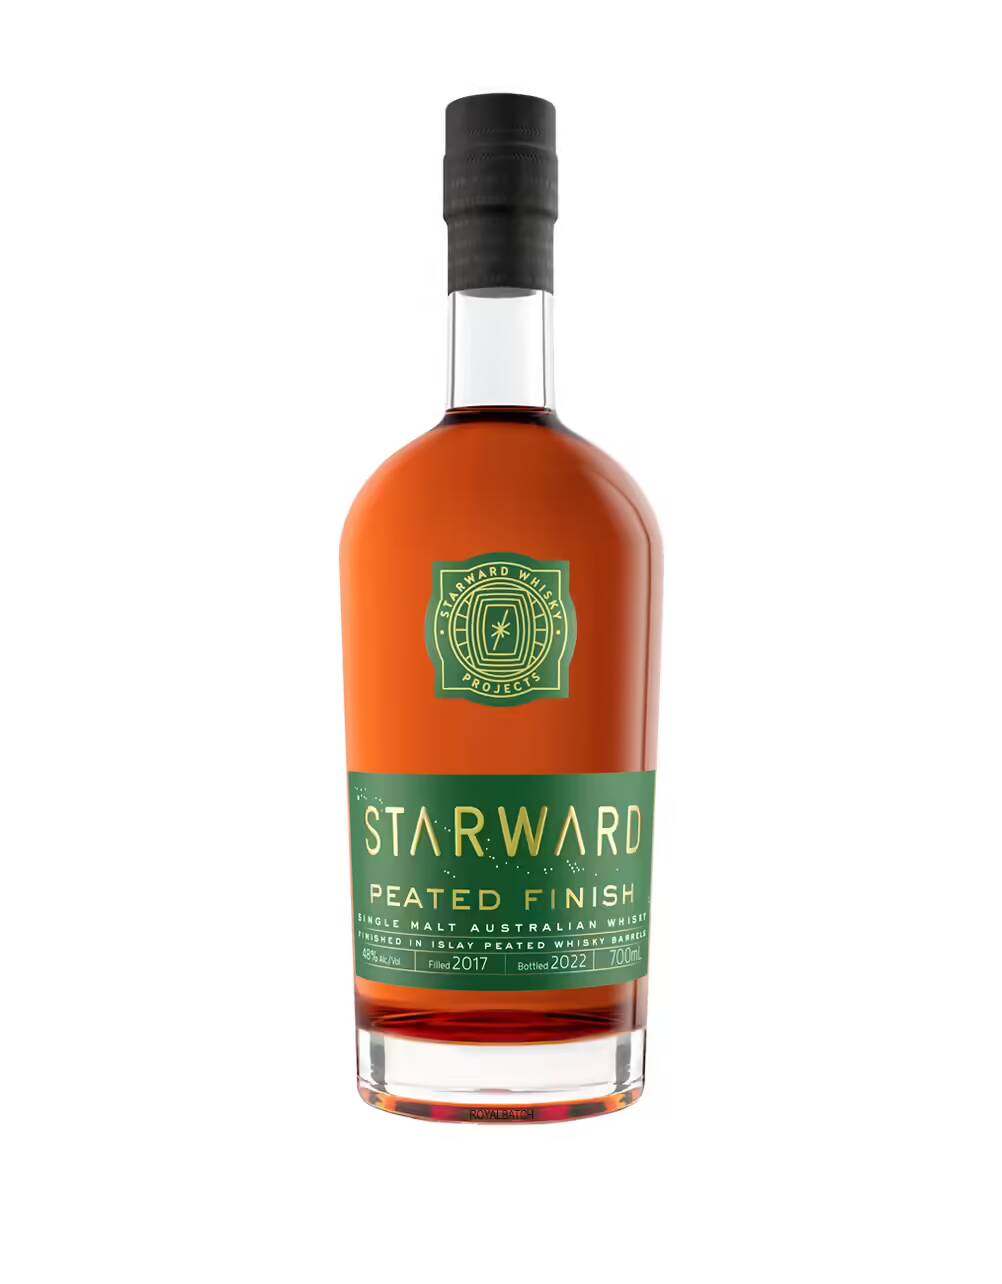 Starward Peated Finish Single Malt Australian Whisky